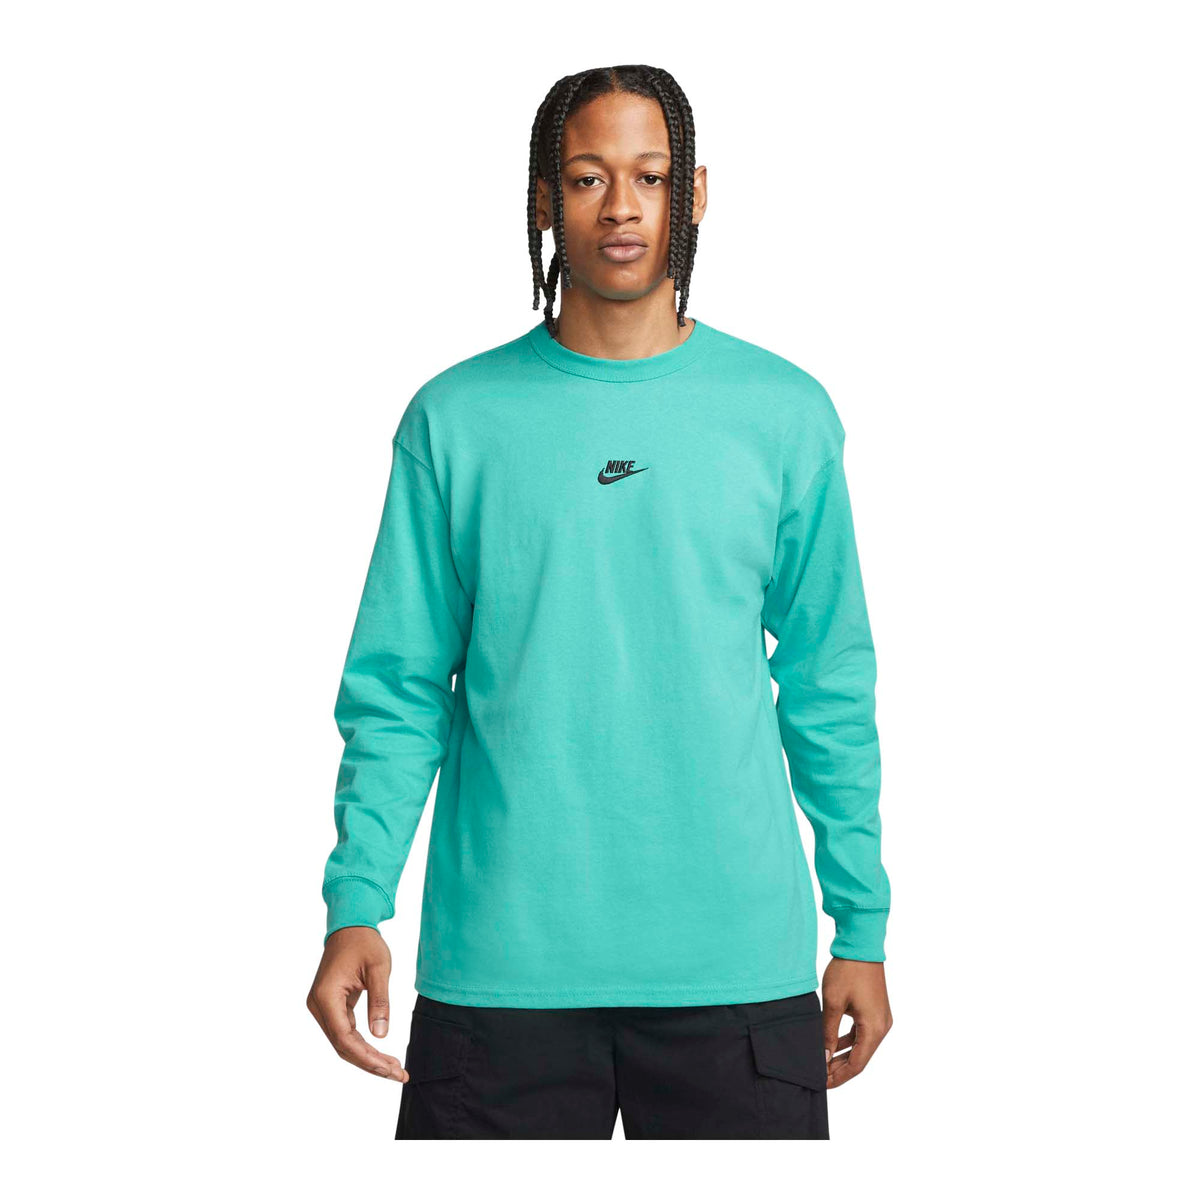 Acronym x Nike Lunar Force 1 2015 Men's Long-Sleeve T-Shirt